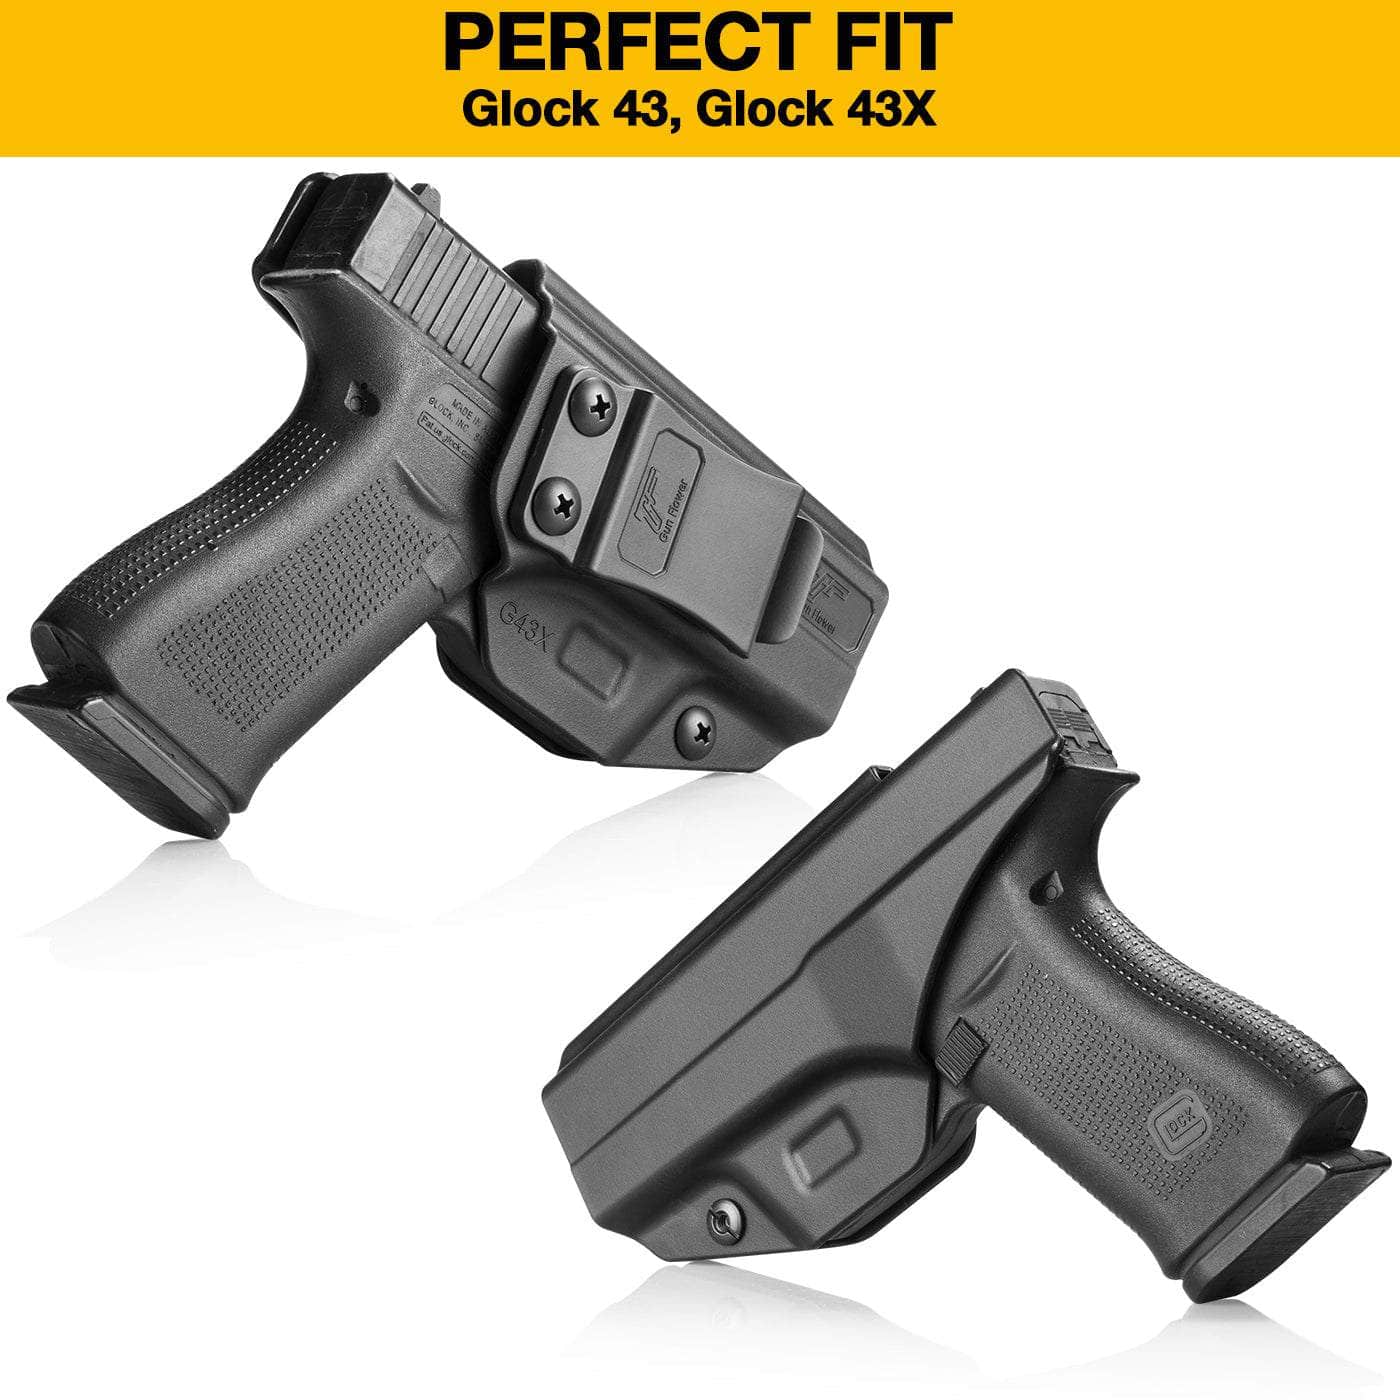 GUN & FLOWER Compatible with Glock 43 G43x, Inside Waistband Carry